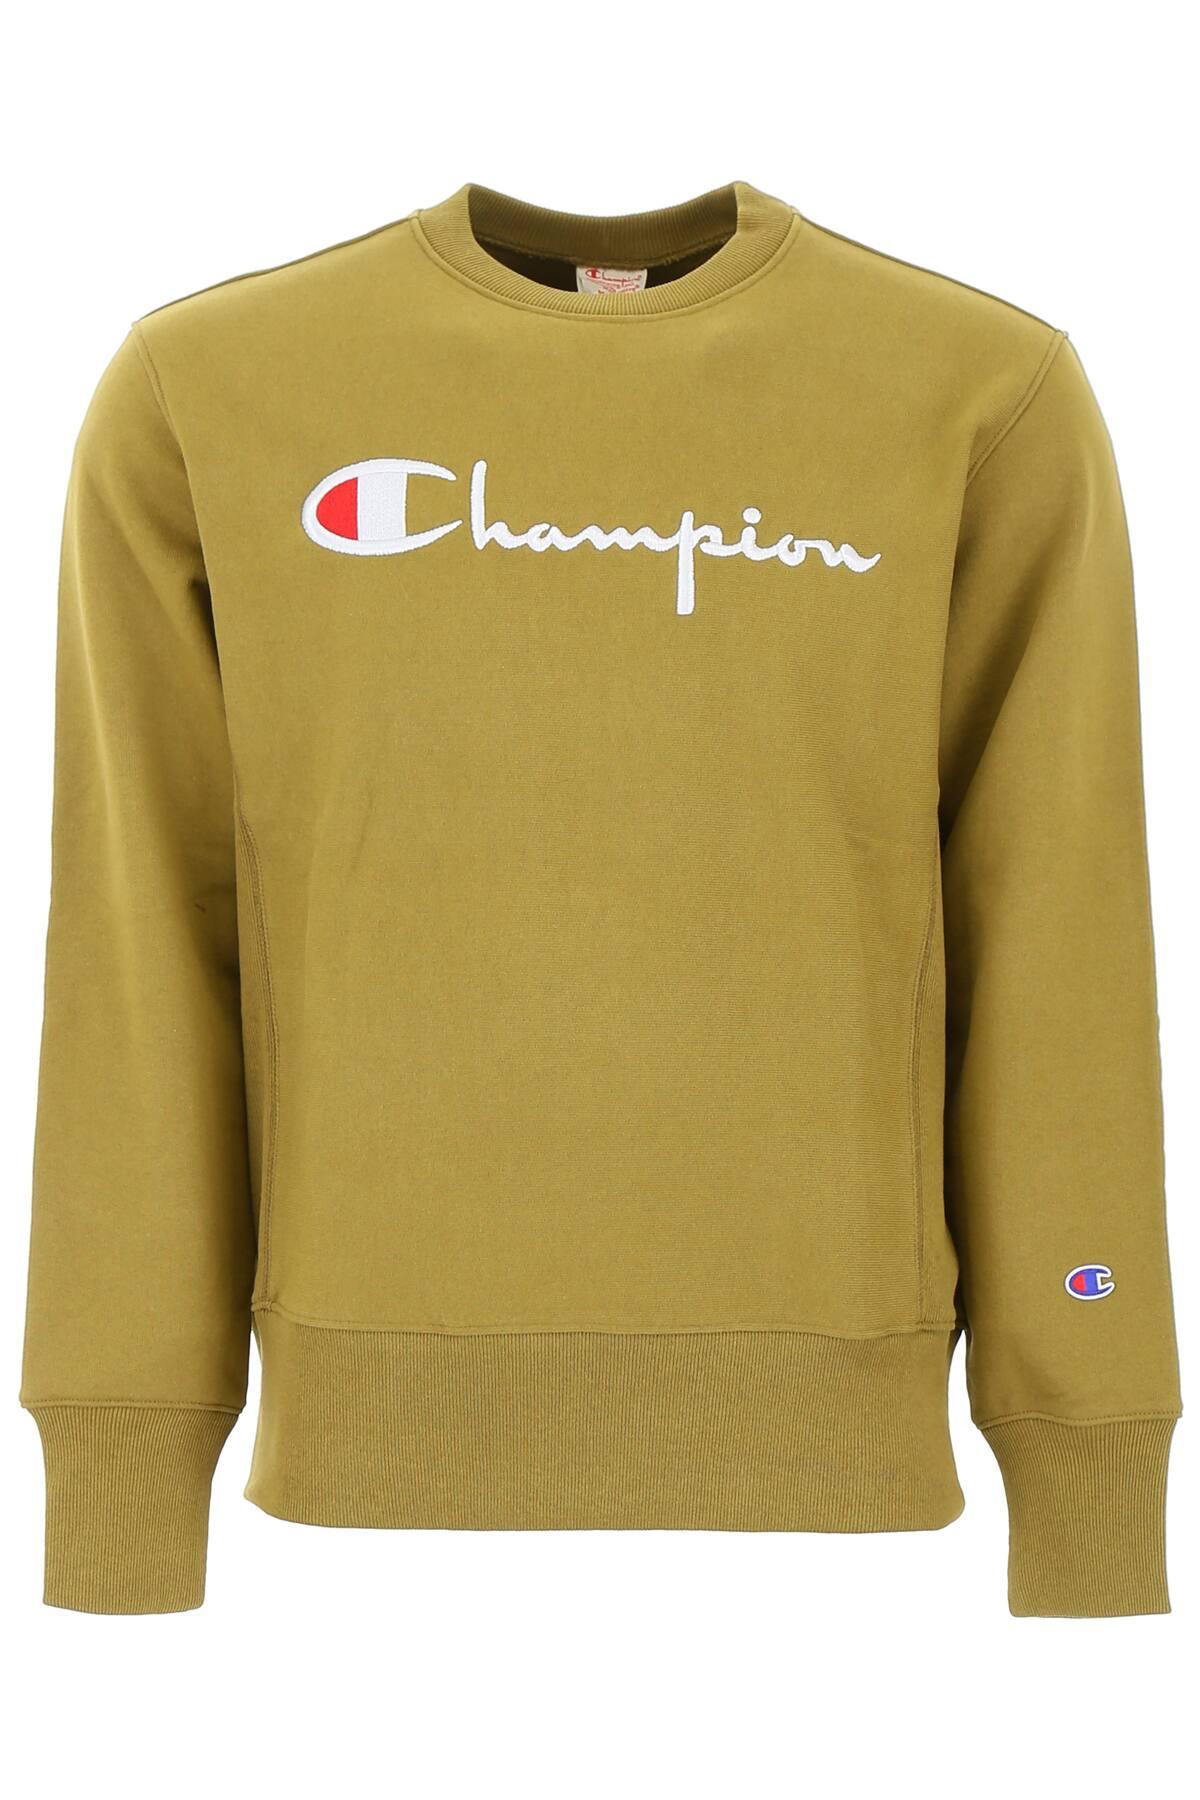 Champion Cotton Logo Sweatshirt in Green for Men - Lyst